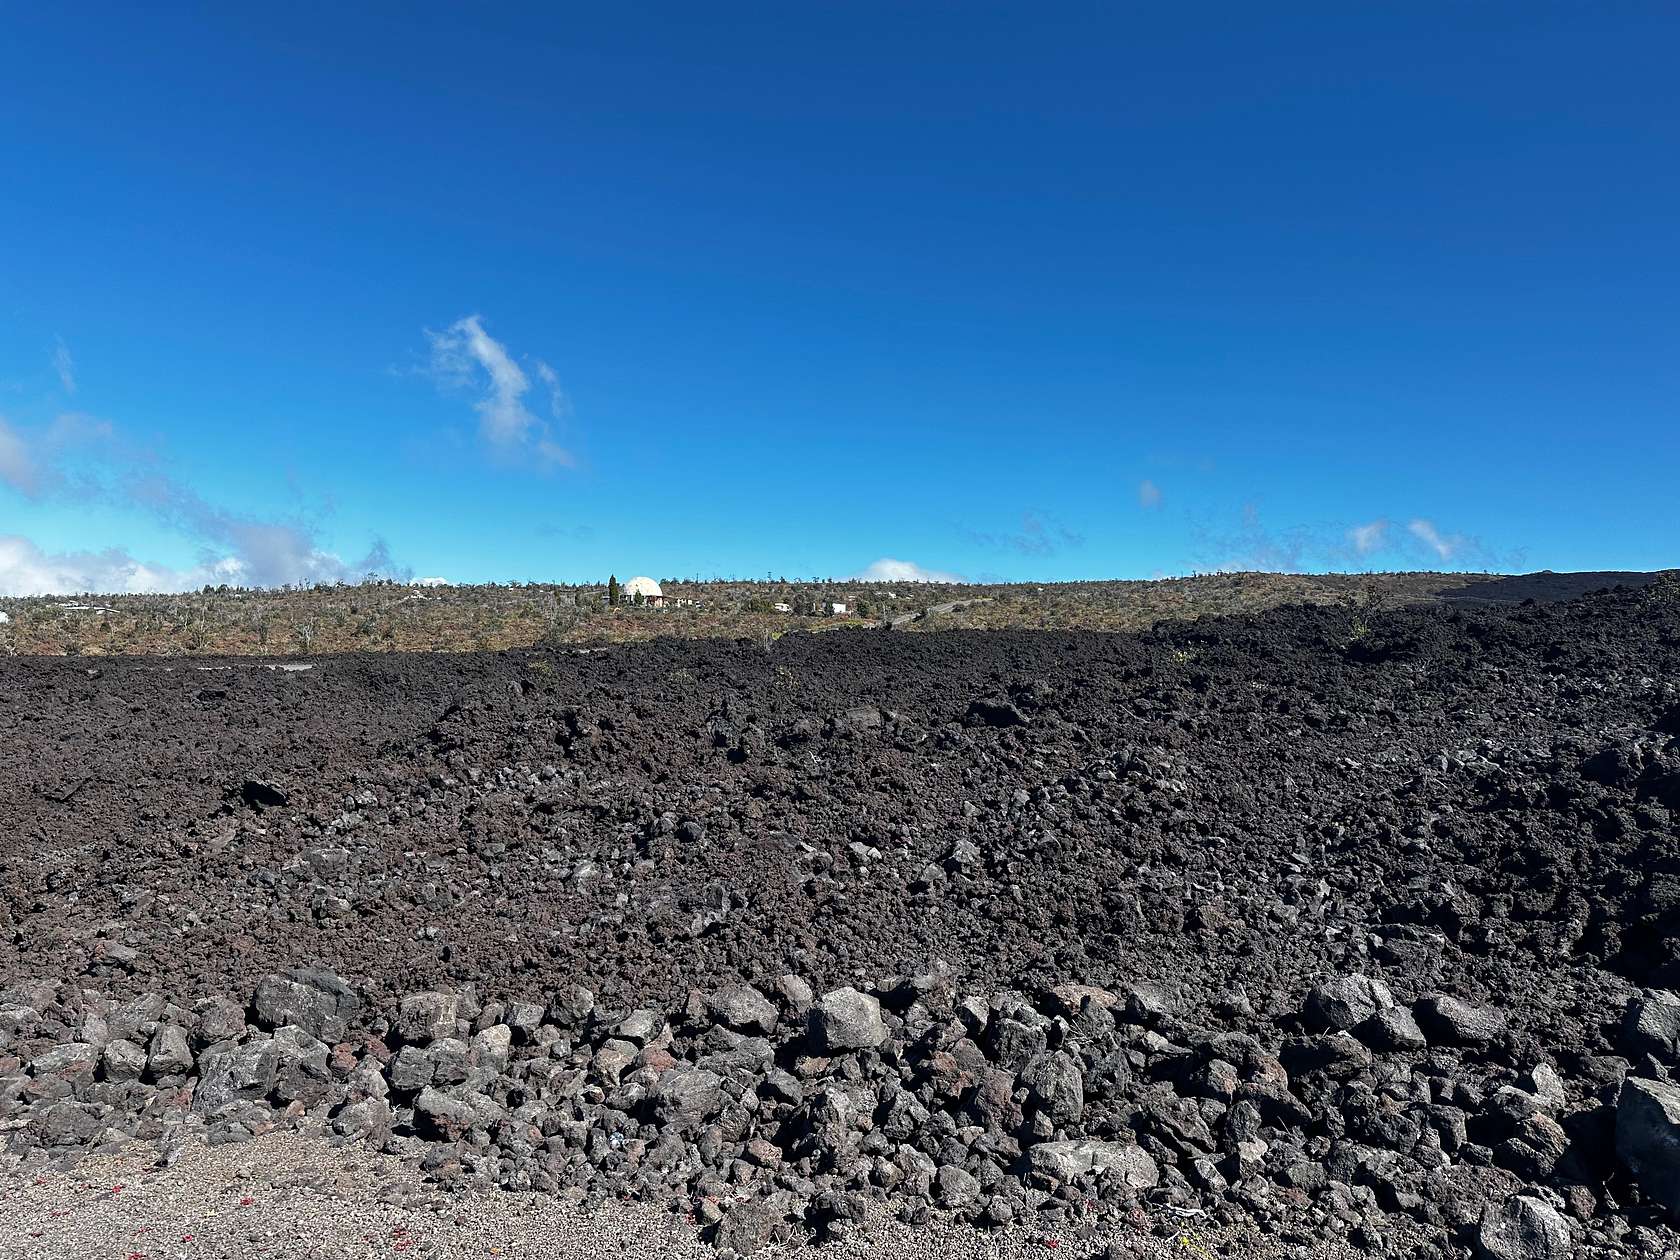 1 Acre of Land for Sale in Hawaiian Ocean View, Hawaii